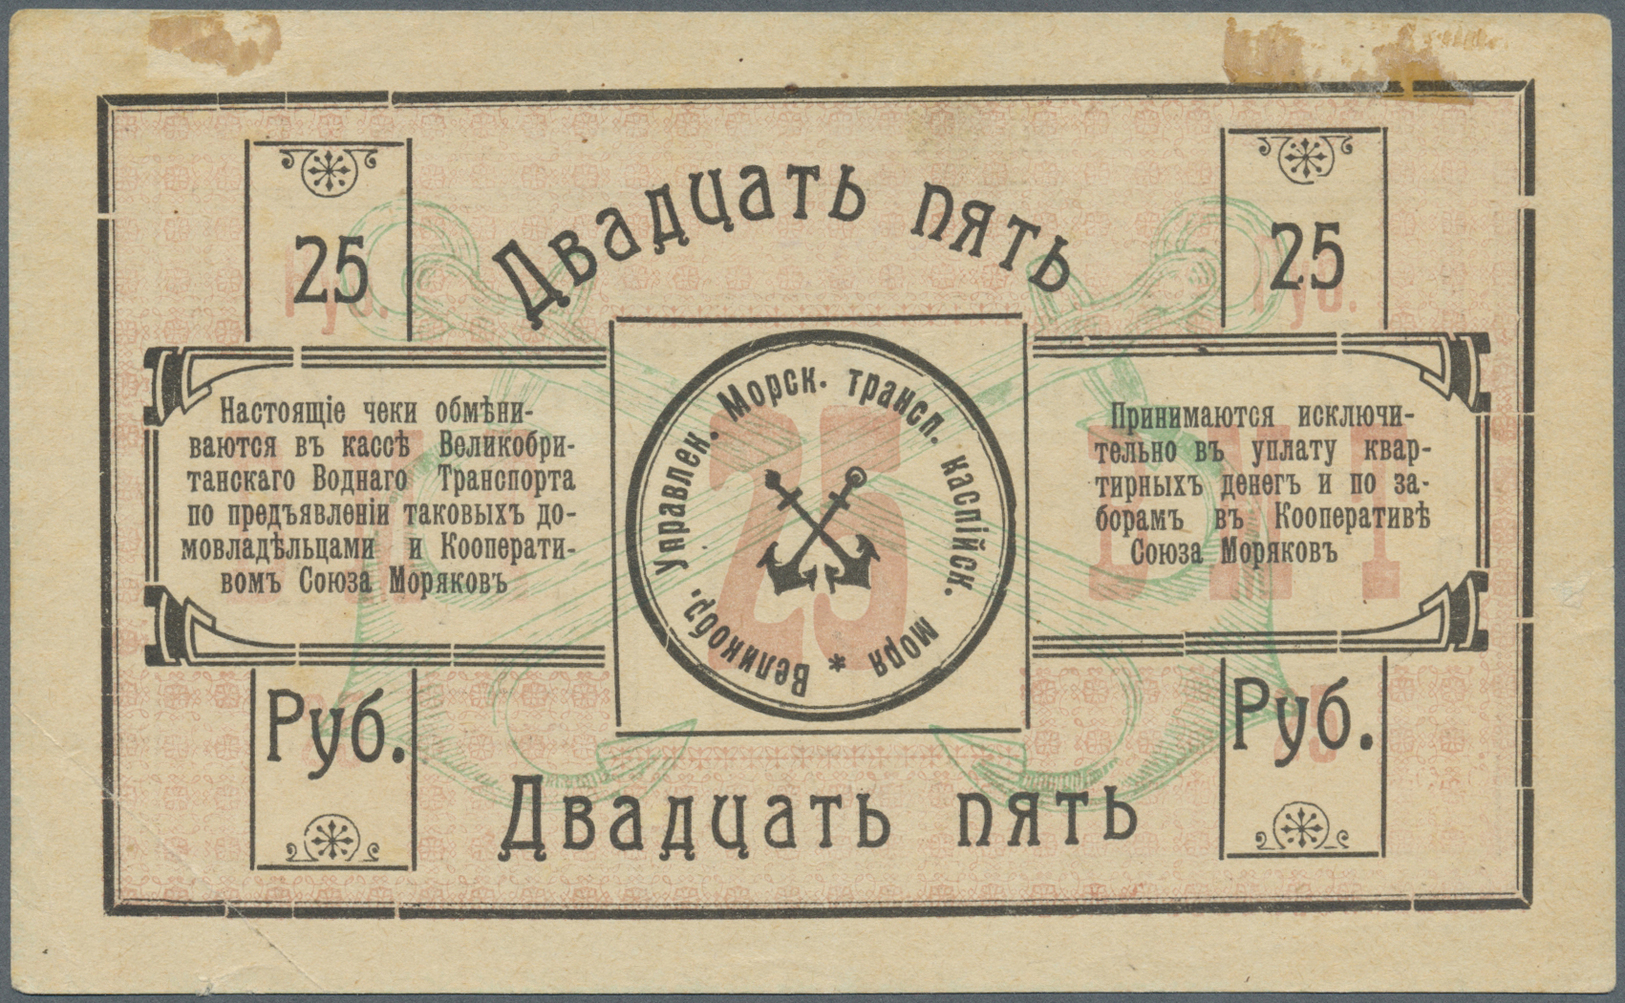 00211 Azerbaijan / Aserbaidschan: British Maritime Transport 25 Rubles 1919 Unsigned Remainder, P.NL, Edge Bend At Lower - Azerbaïdjan